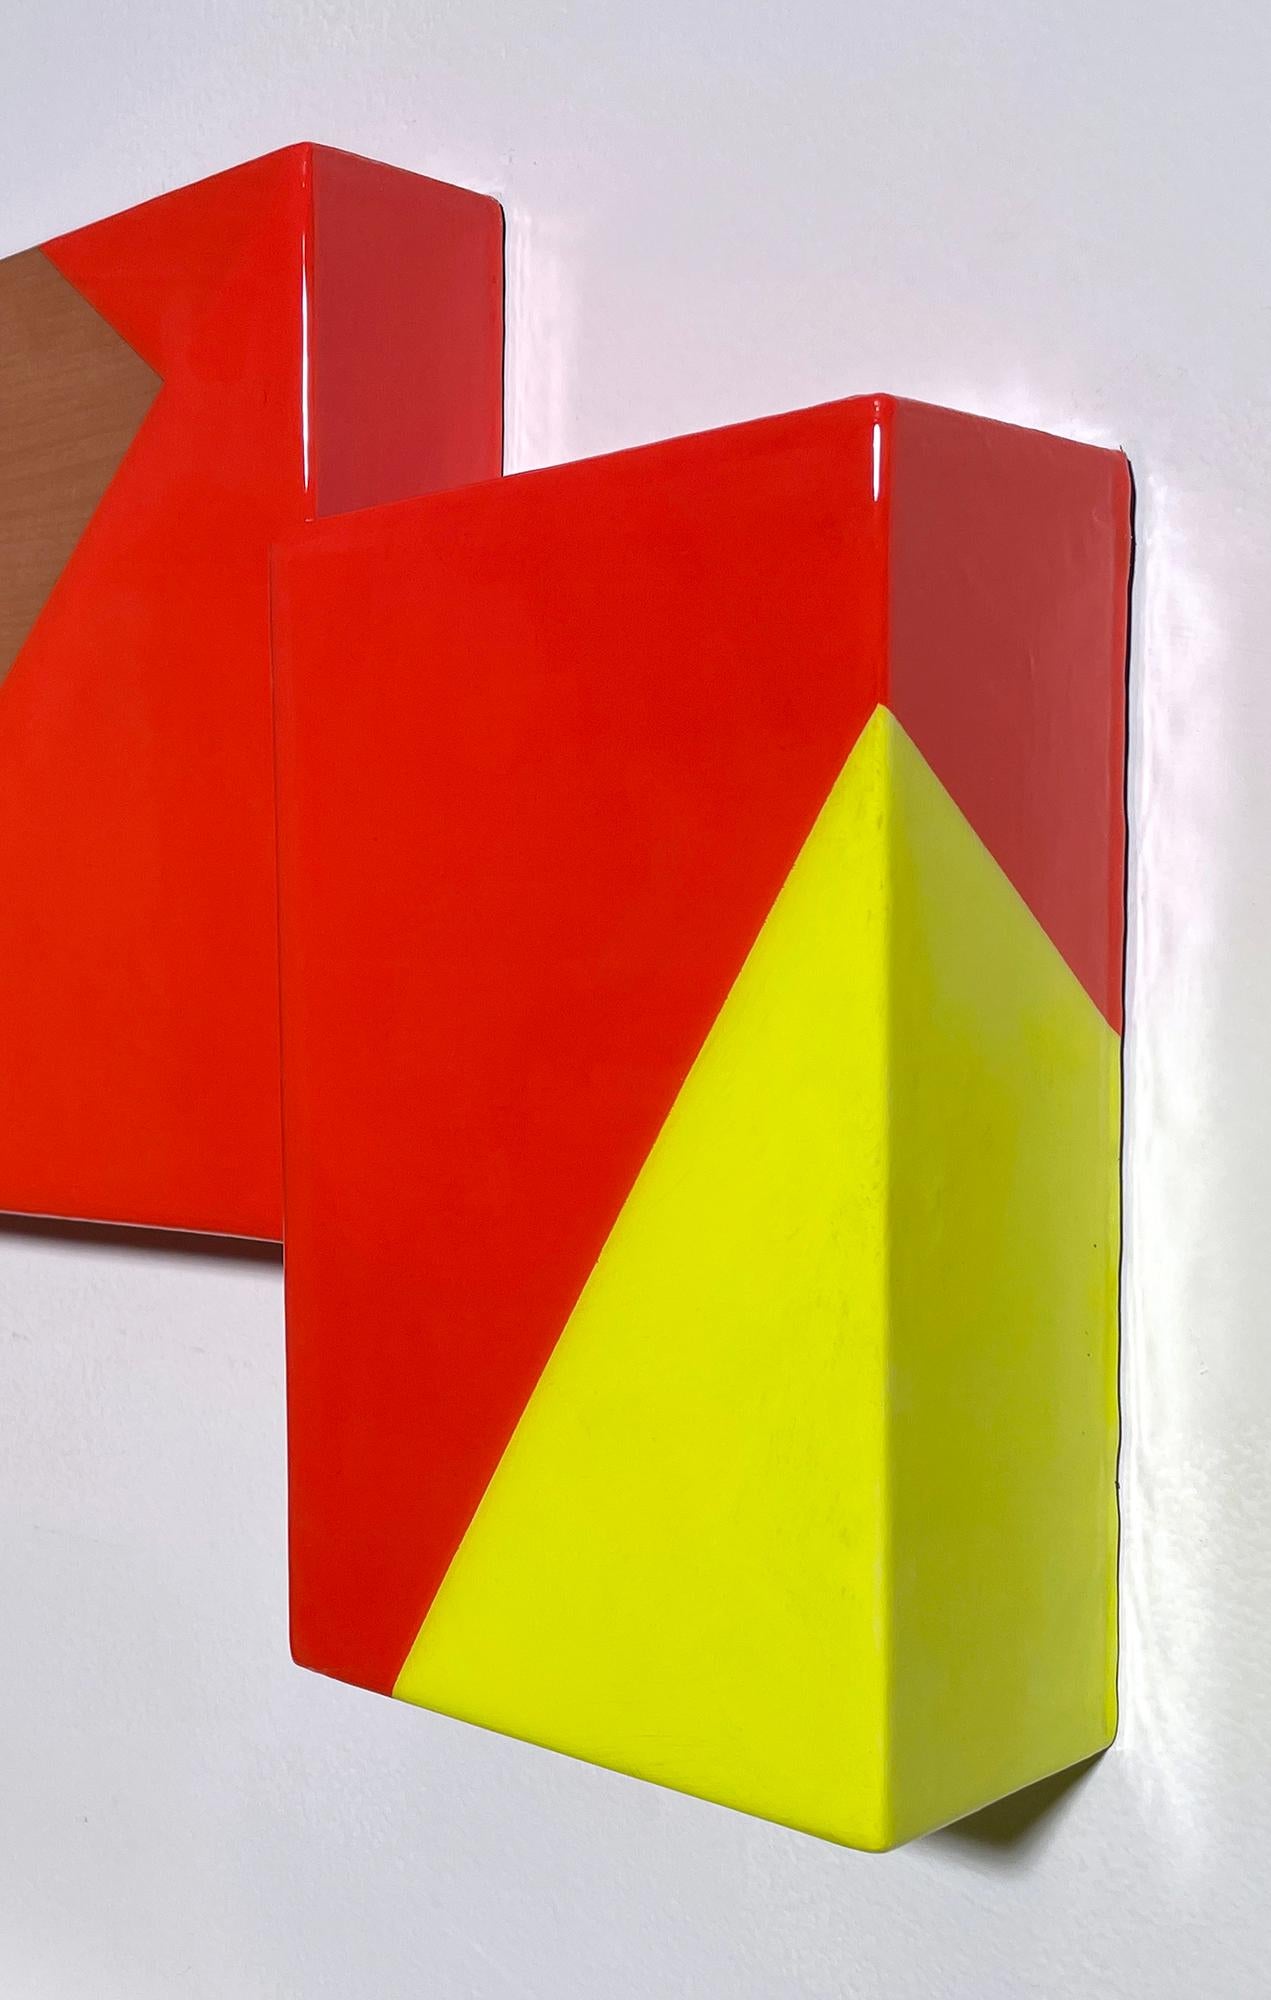 Puzzle 108, minimalist, resin, acrylic, pop art, orange, blue, yellow, abstract - Minimalist Sculpture by David E. Peterson